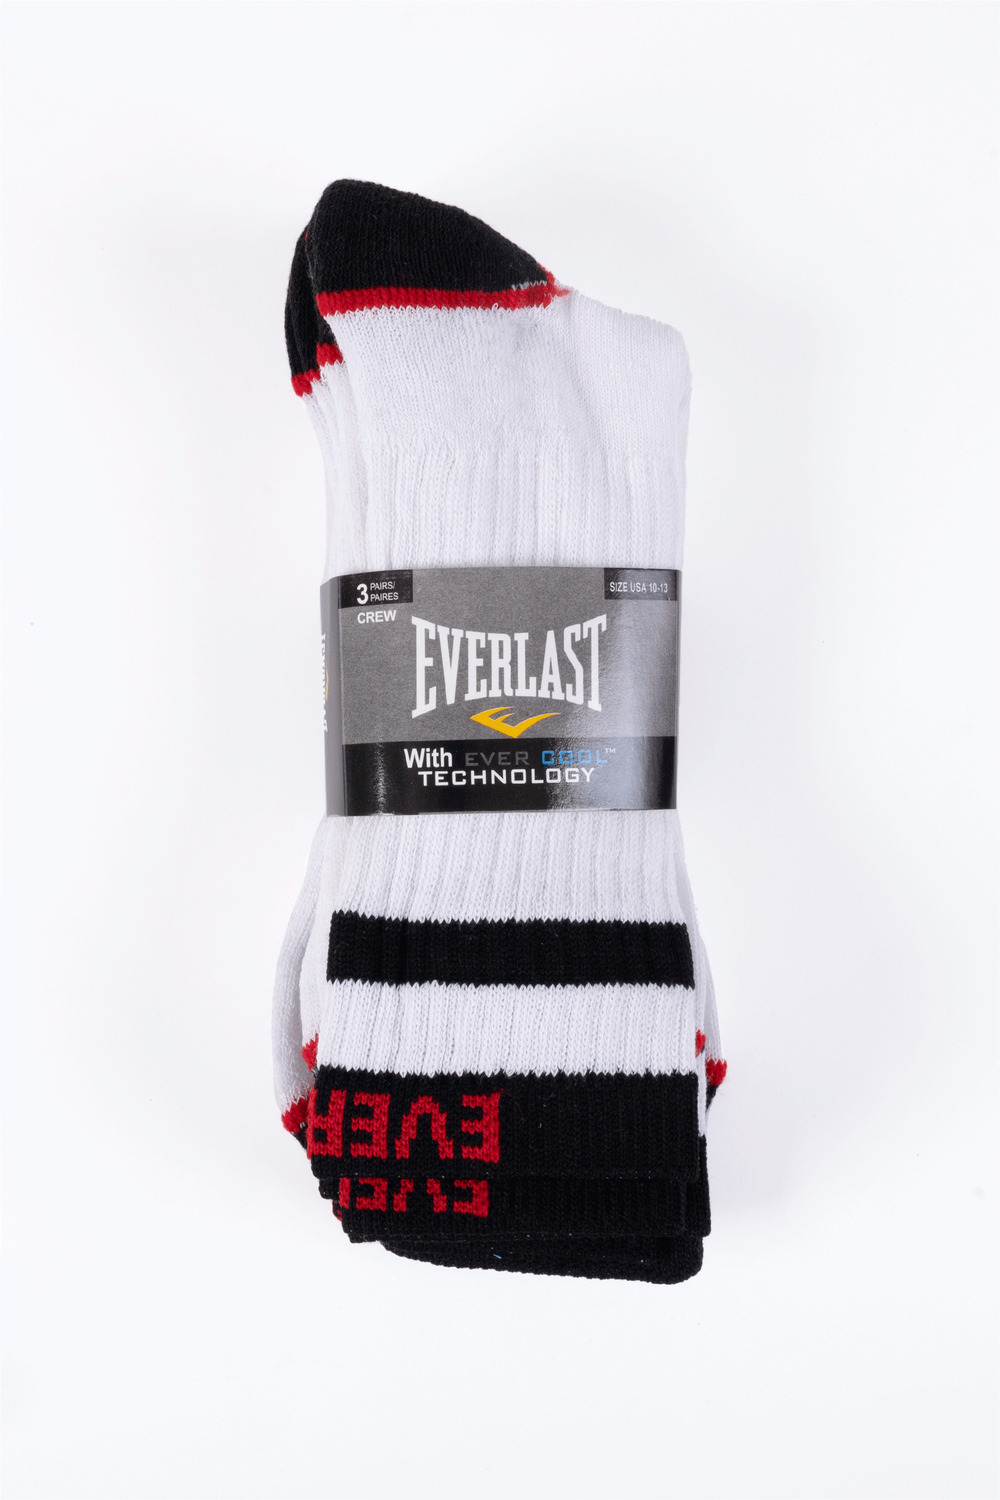 Everlast - Men's crew sport socks, 3 pairs